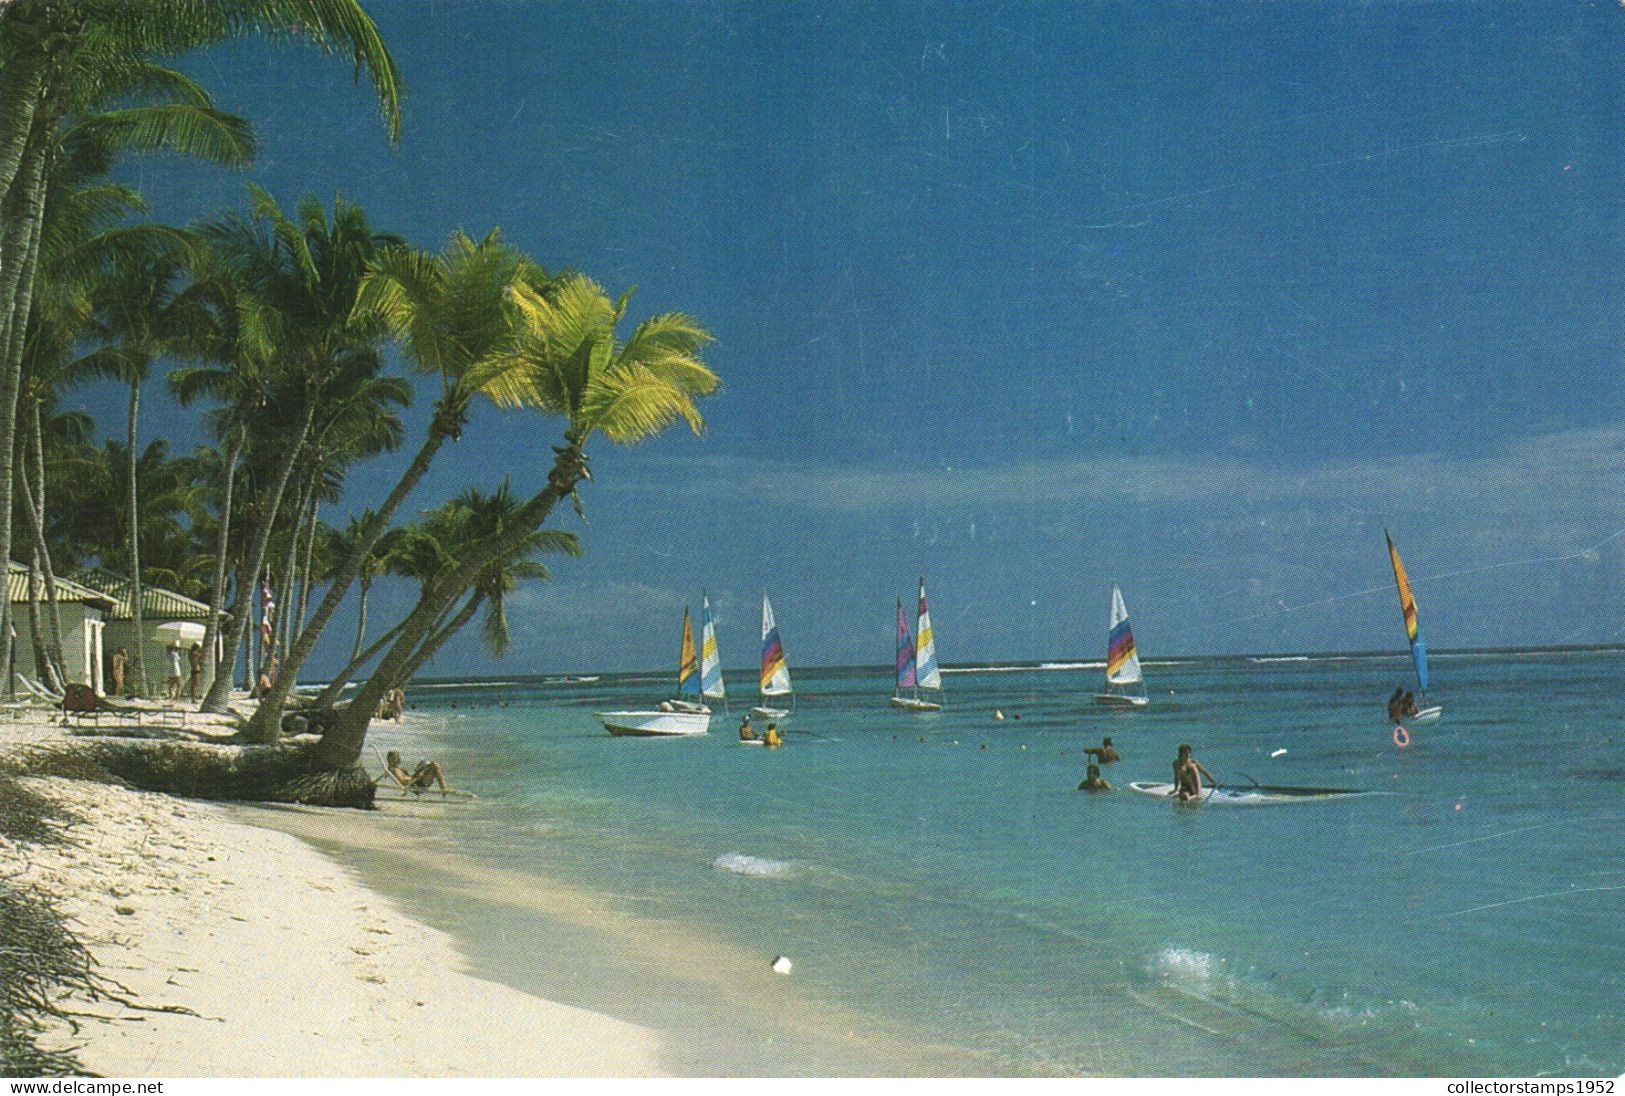 PUNTA CANA, BEACH, PLAGE, BOATS, SURF, DOMINICAN REPUBLIC - Dominican Republic